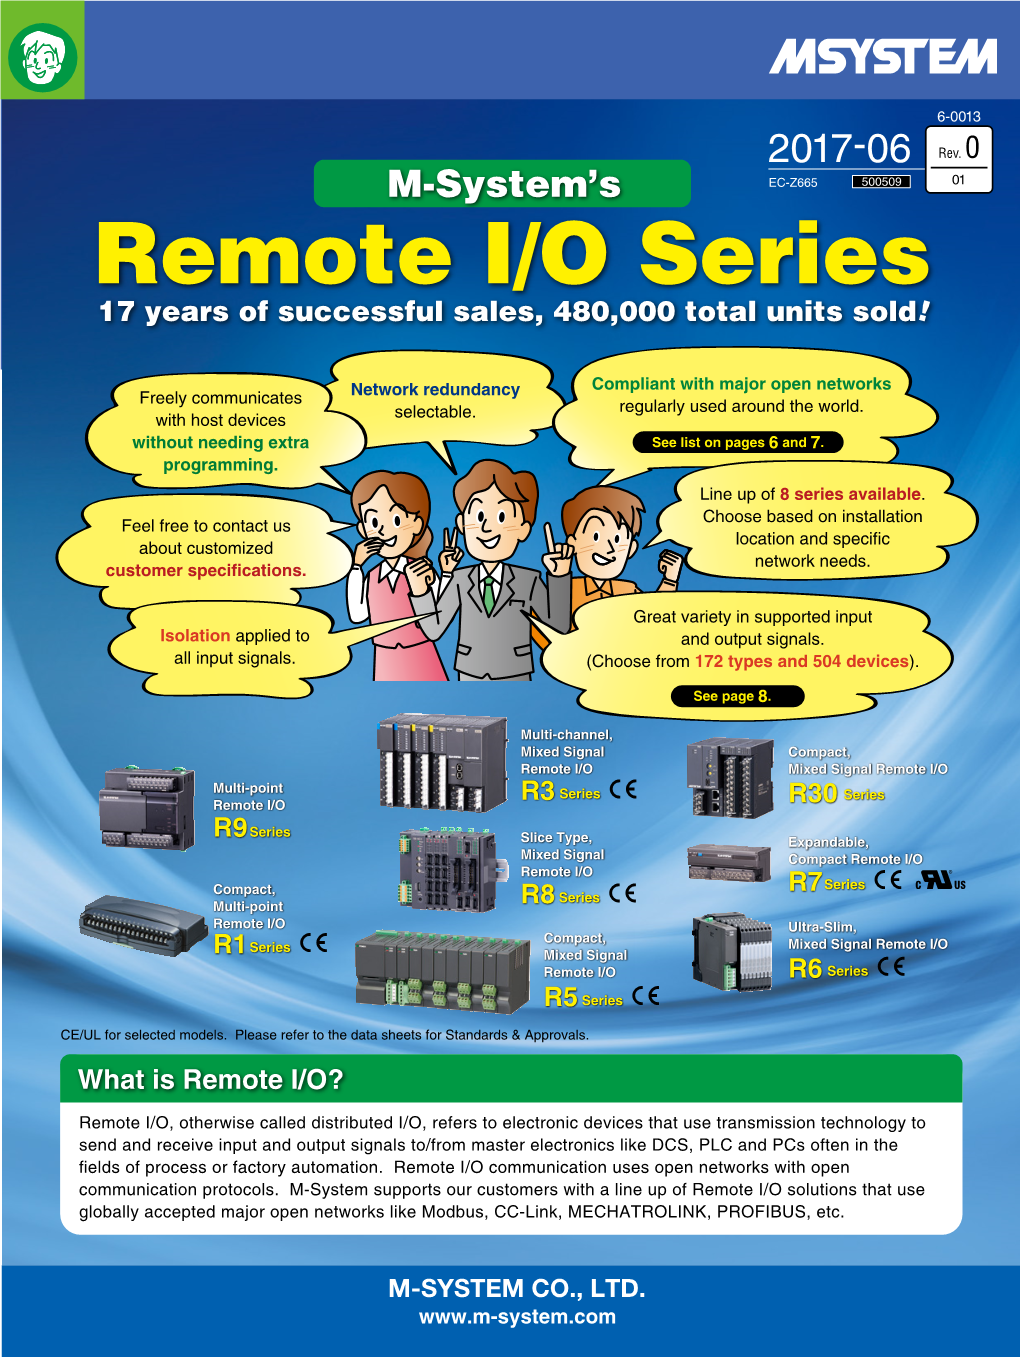 Remote I/O Series Lineup 1